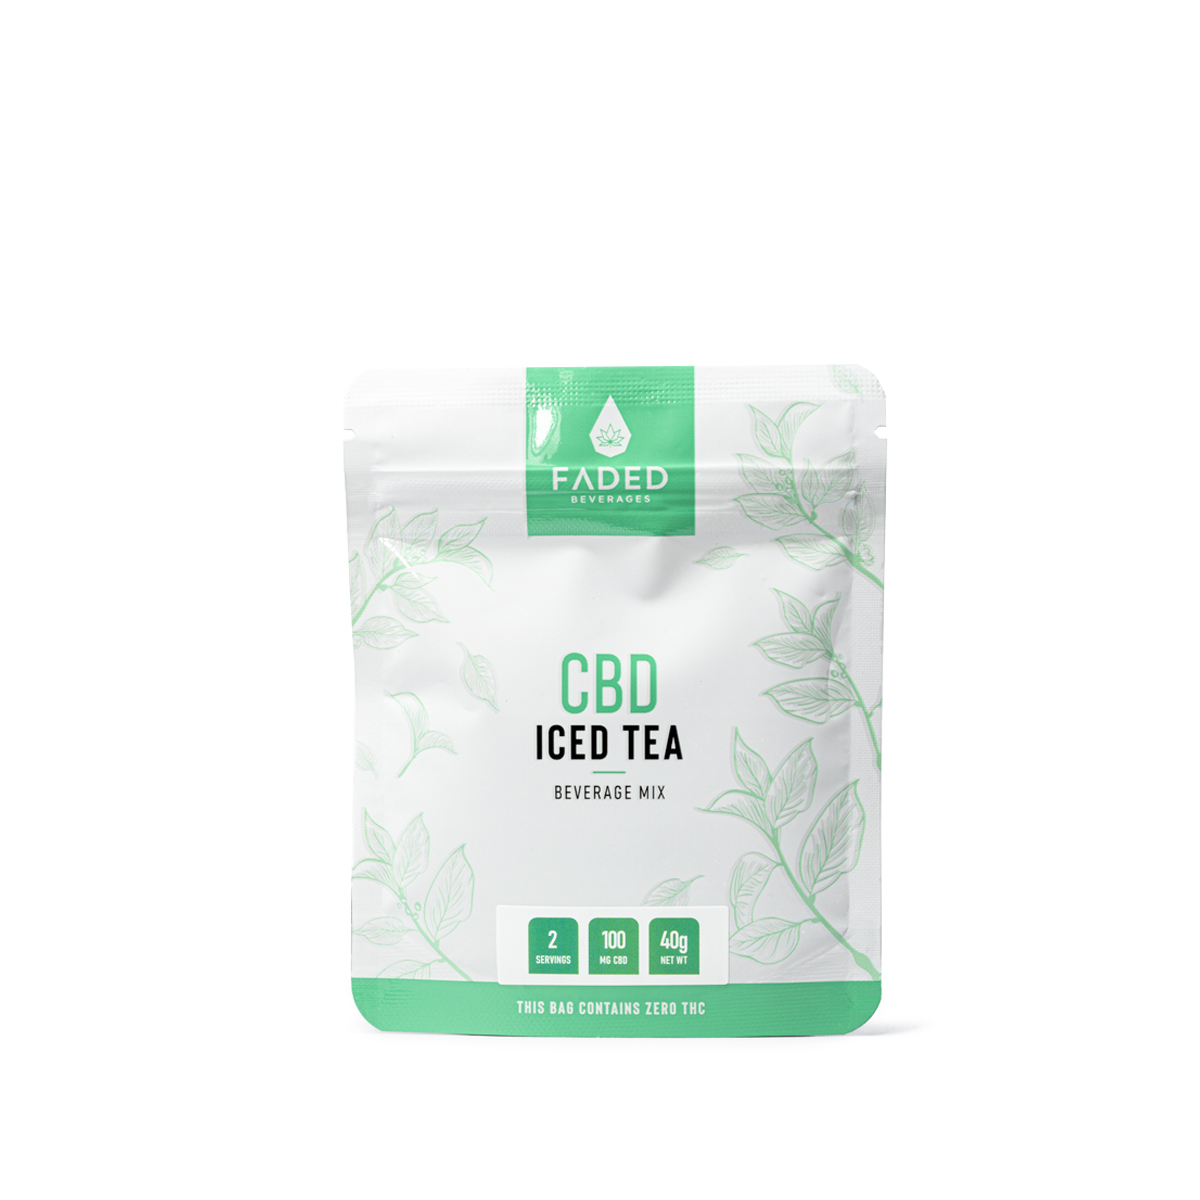 ICED TEA – 100MG CBD – FADED